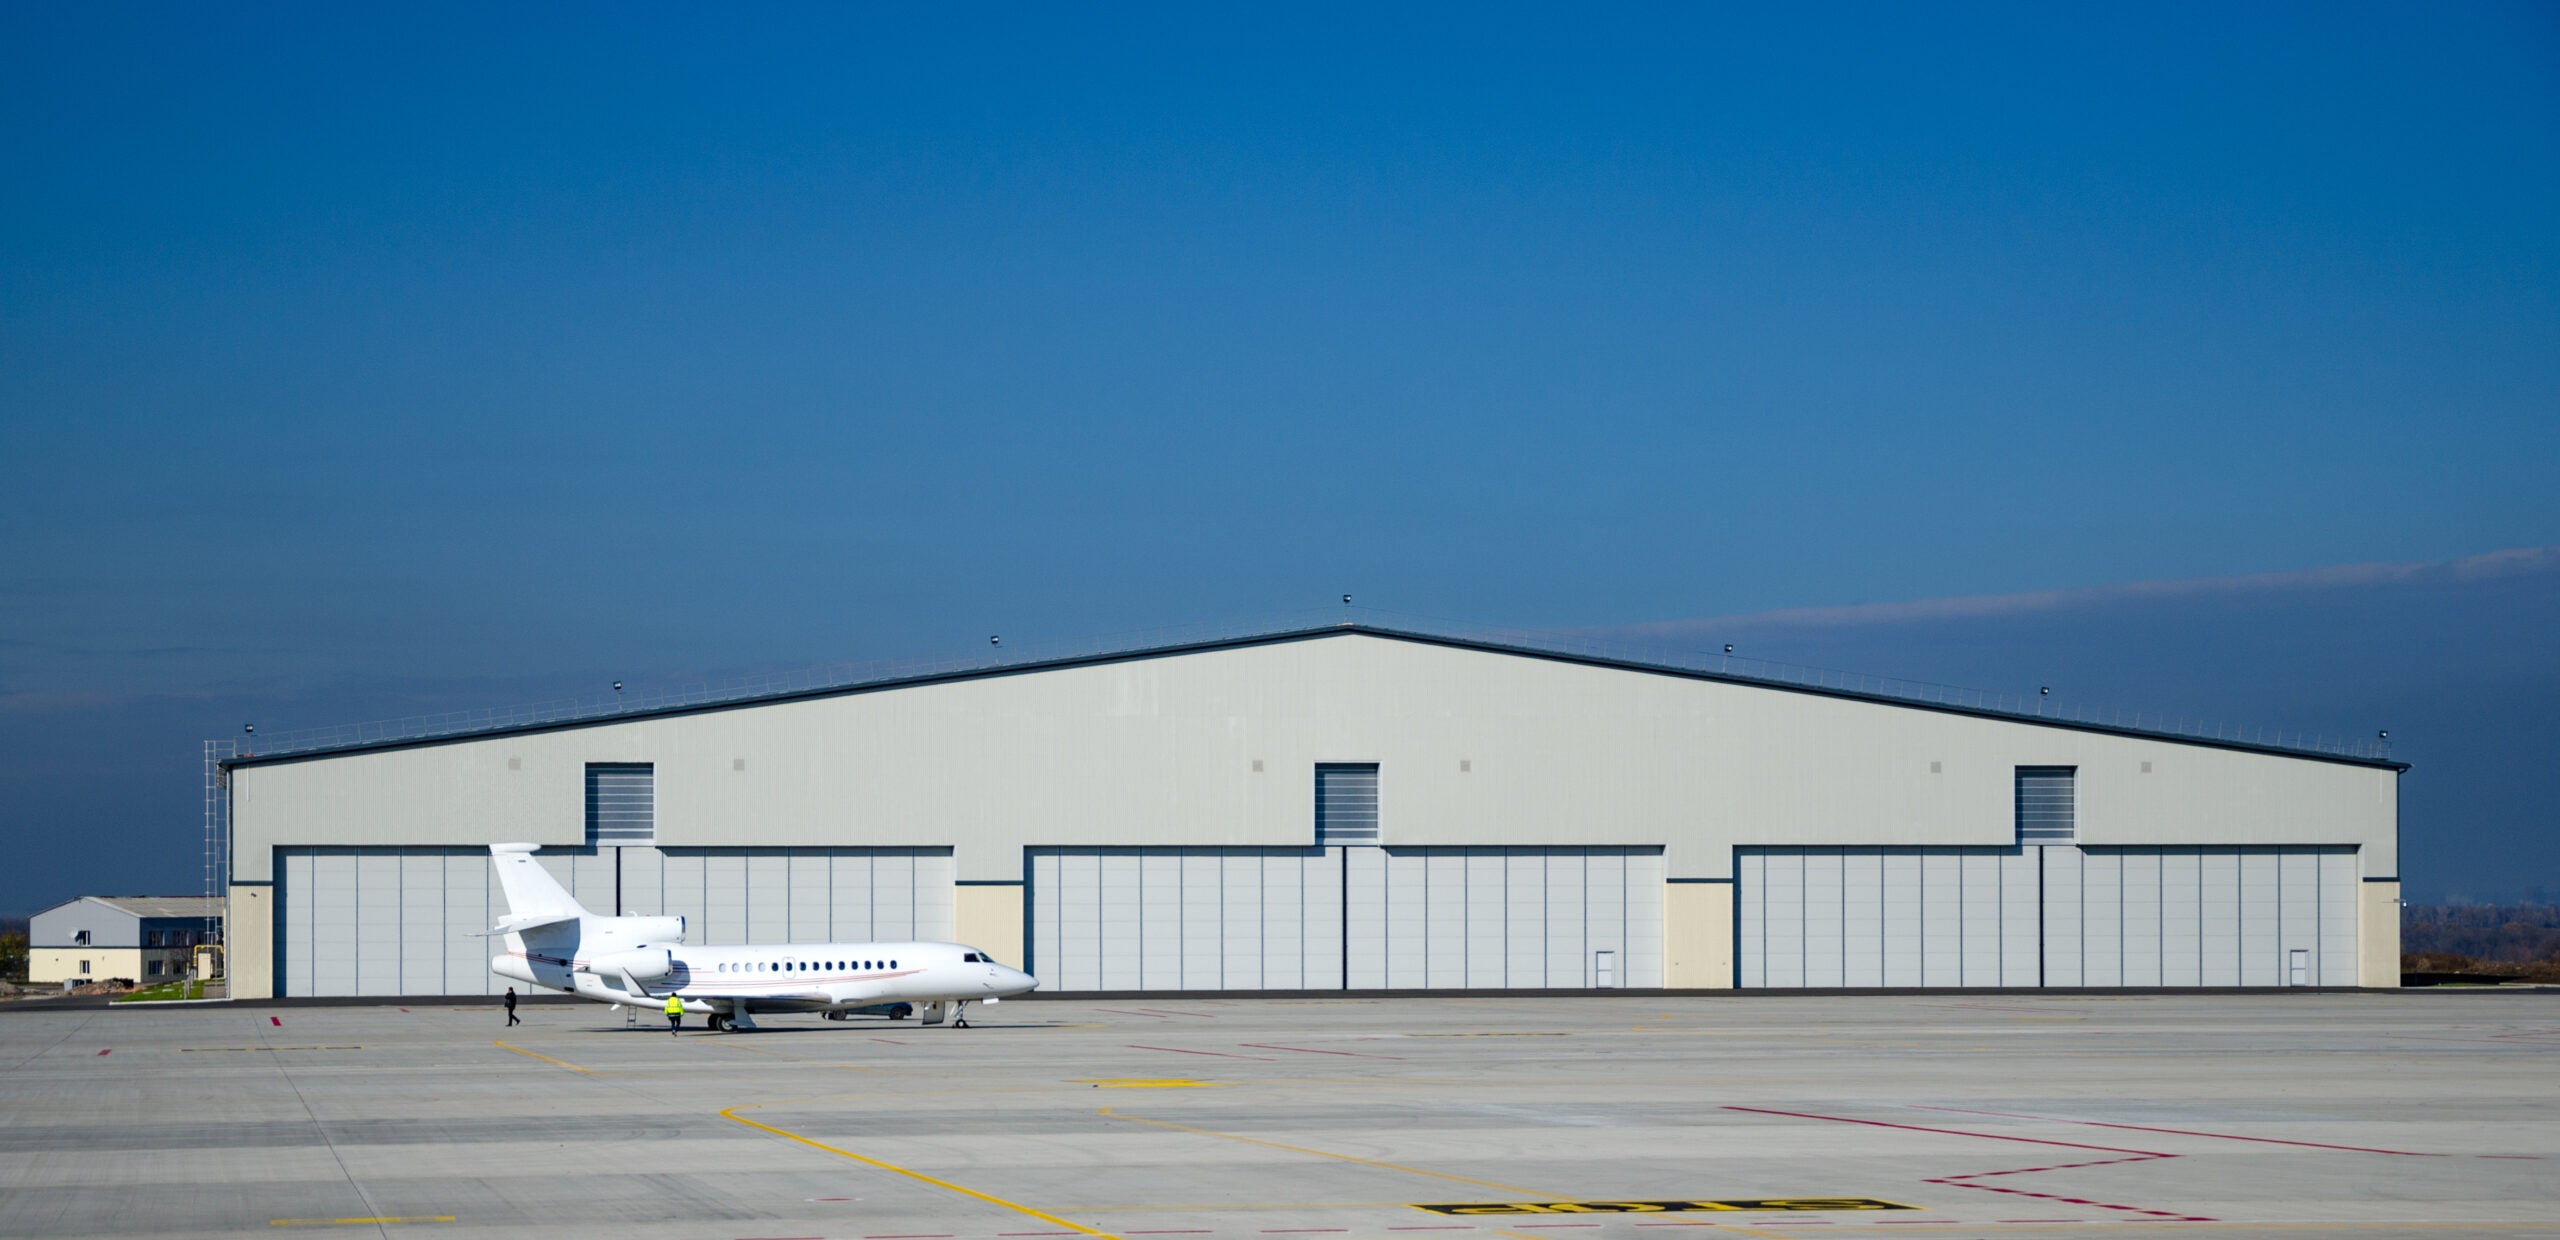 Will a Lack of Hangar Space Hamper Innovation?